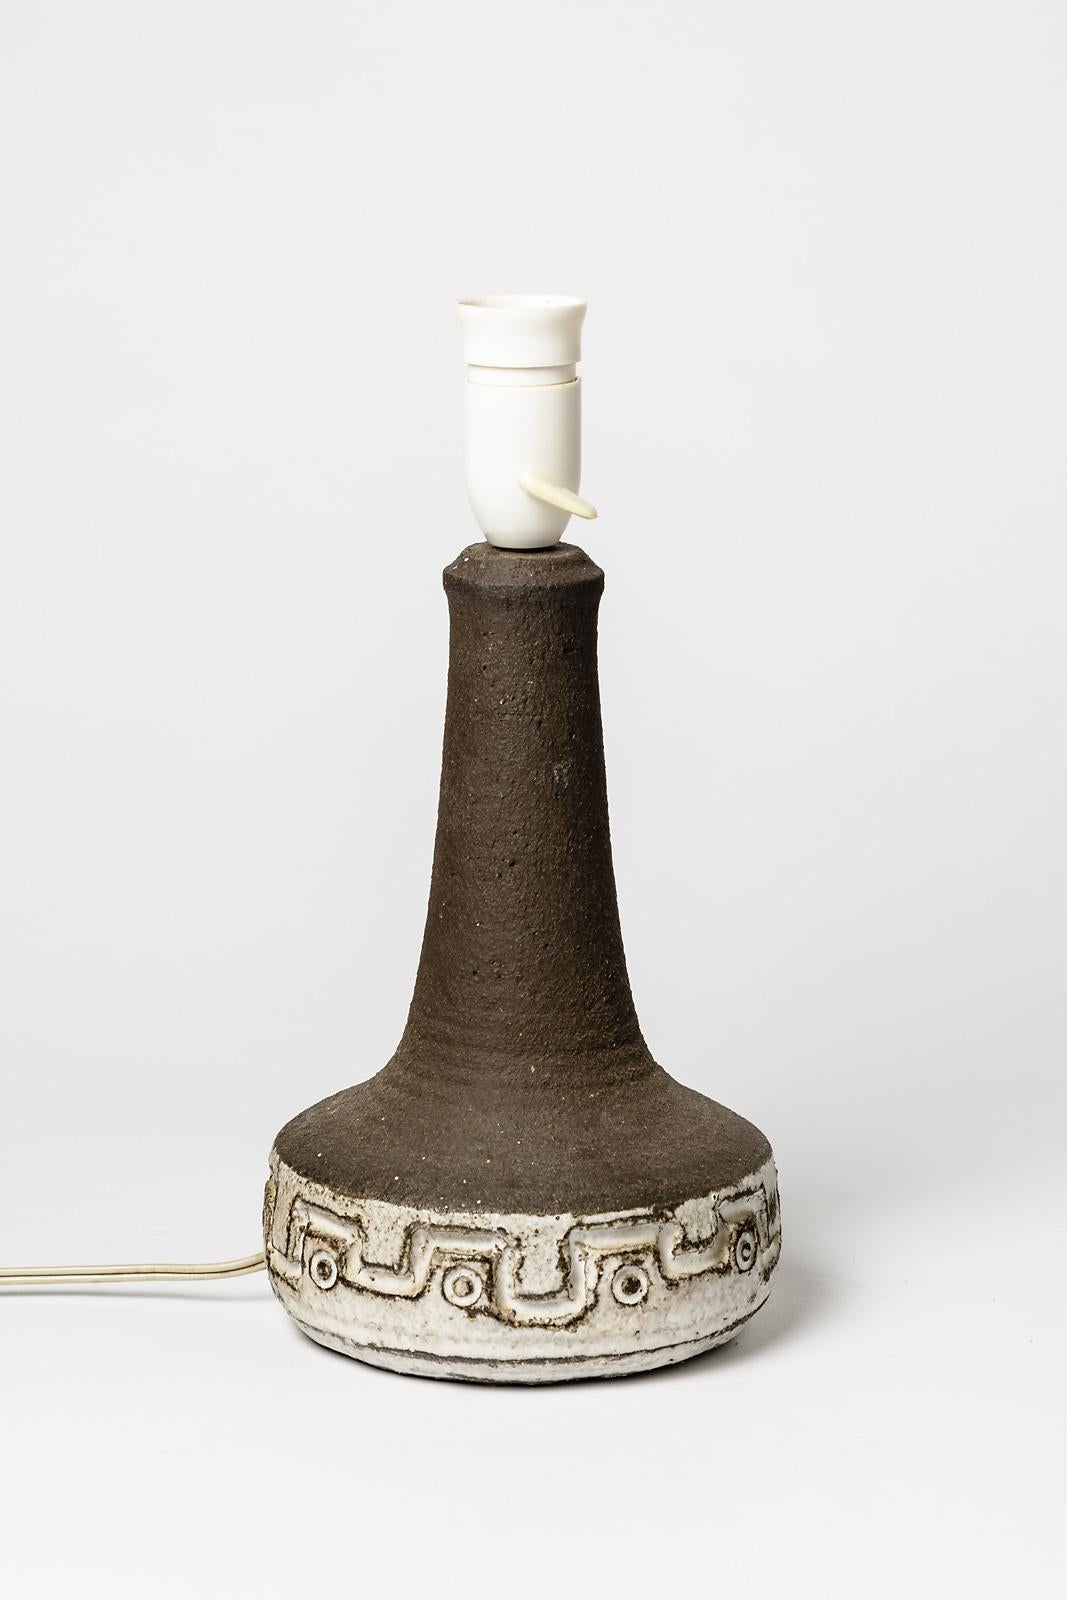 Mid-Century Modern Black and White Stoneware Ceramic Table Lamp circa 1970 French Design For Sale